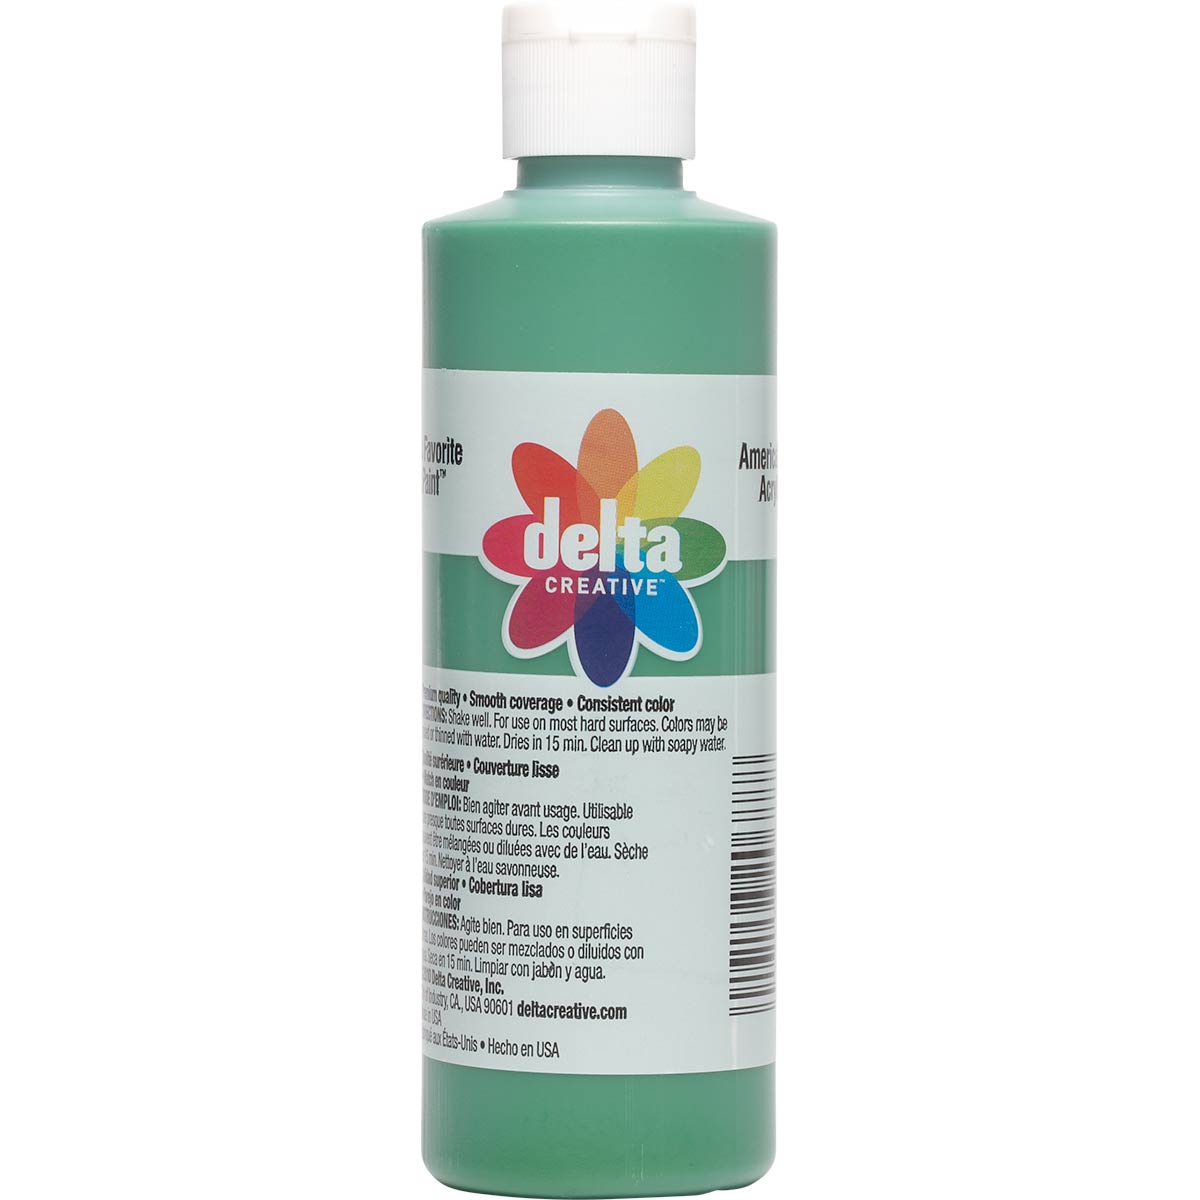 Delta Ceramcoat ® Acrylic Paint - Christmas Green, 8 oz. - 020680802W